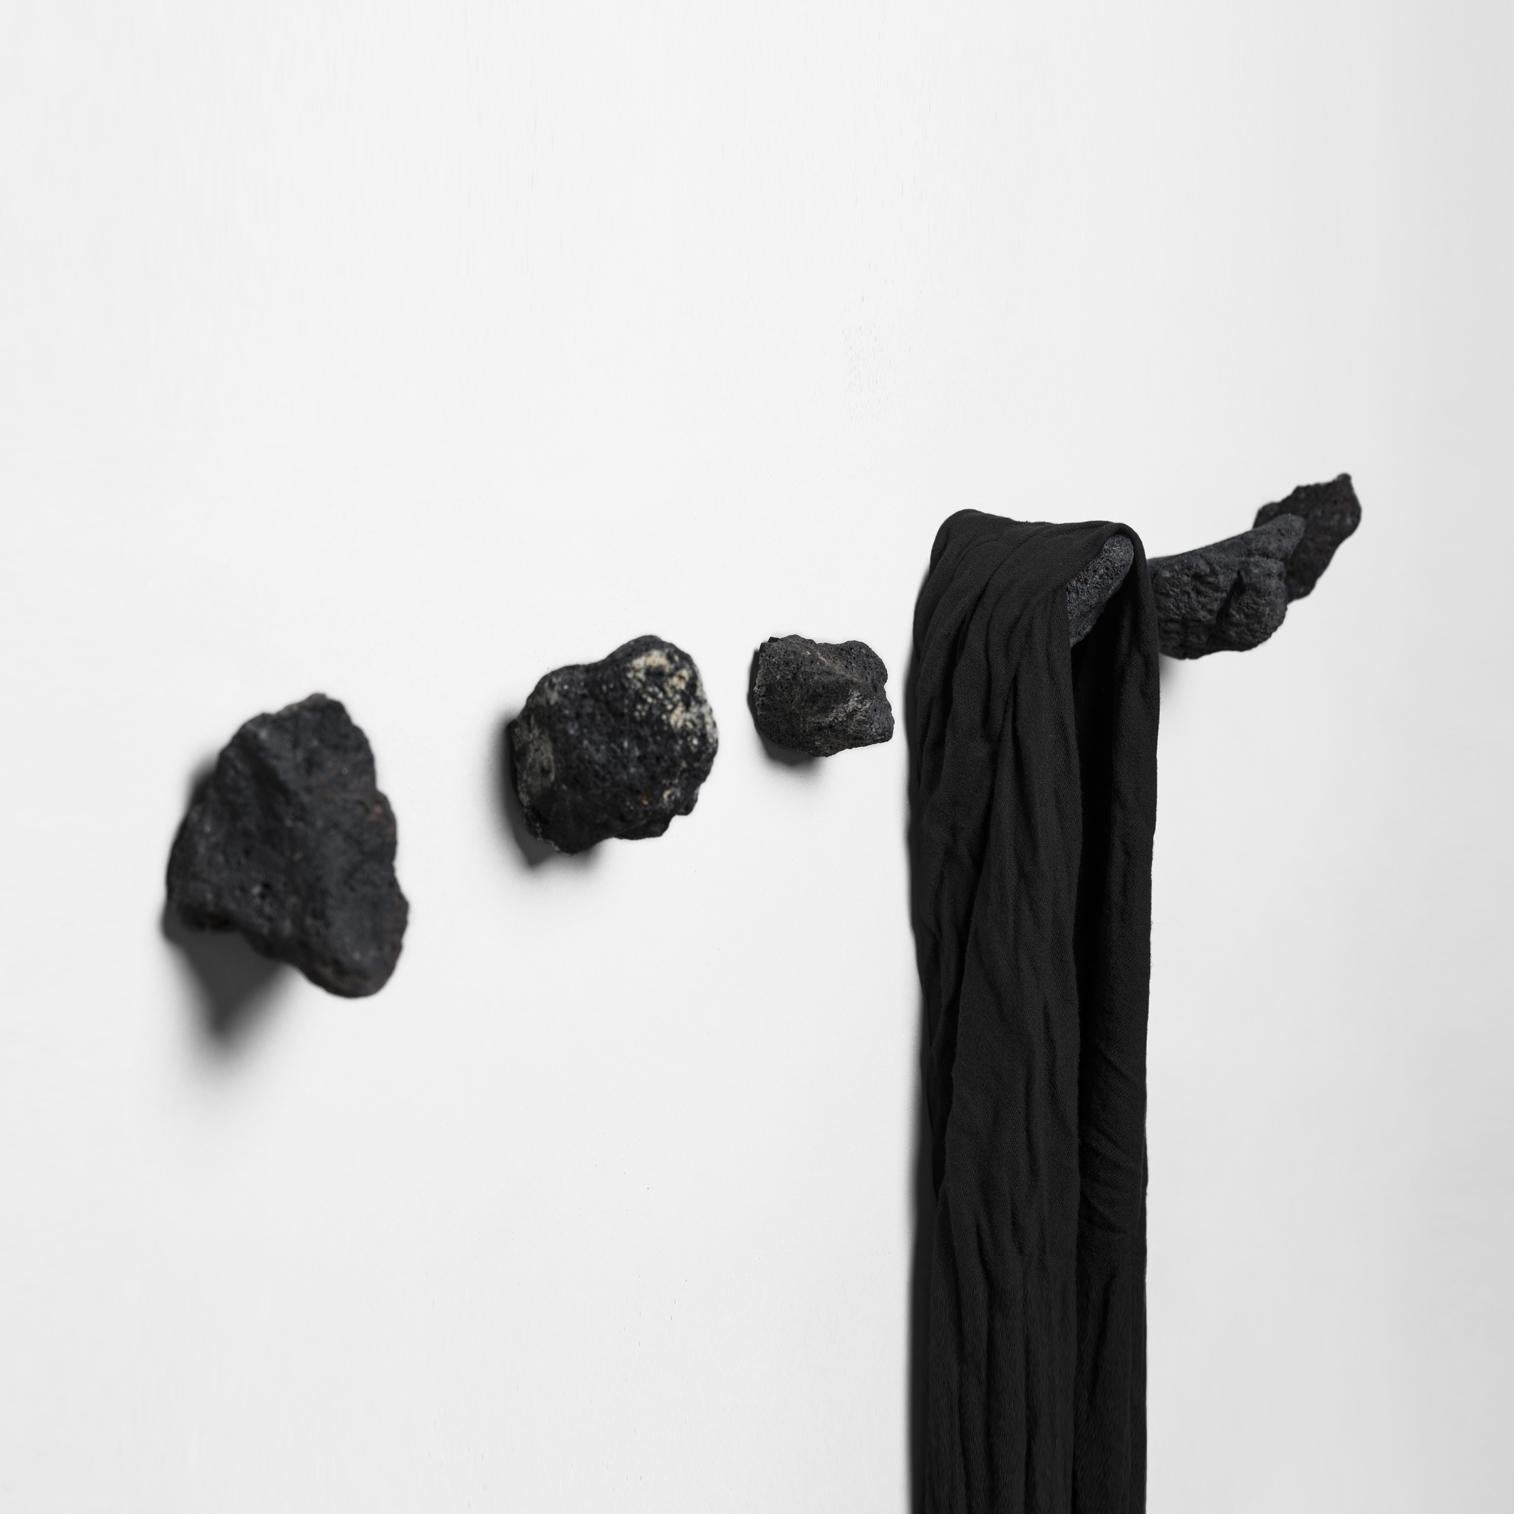 Set of hooks 'Me' by Buzao x Bentu design.
Black lava stone

Set of 3 hooks

Dimensions of 1 hook: 5 x 3 cm.